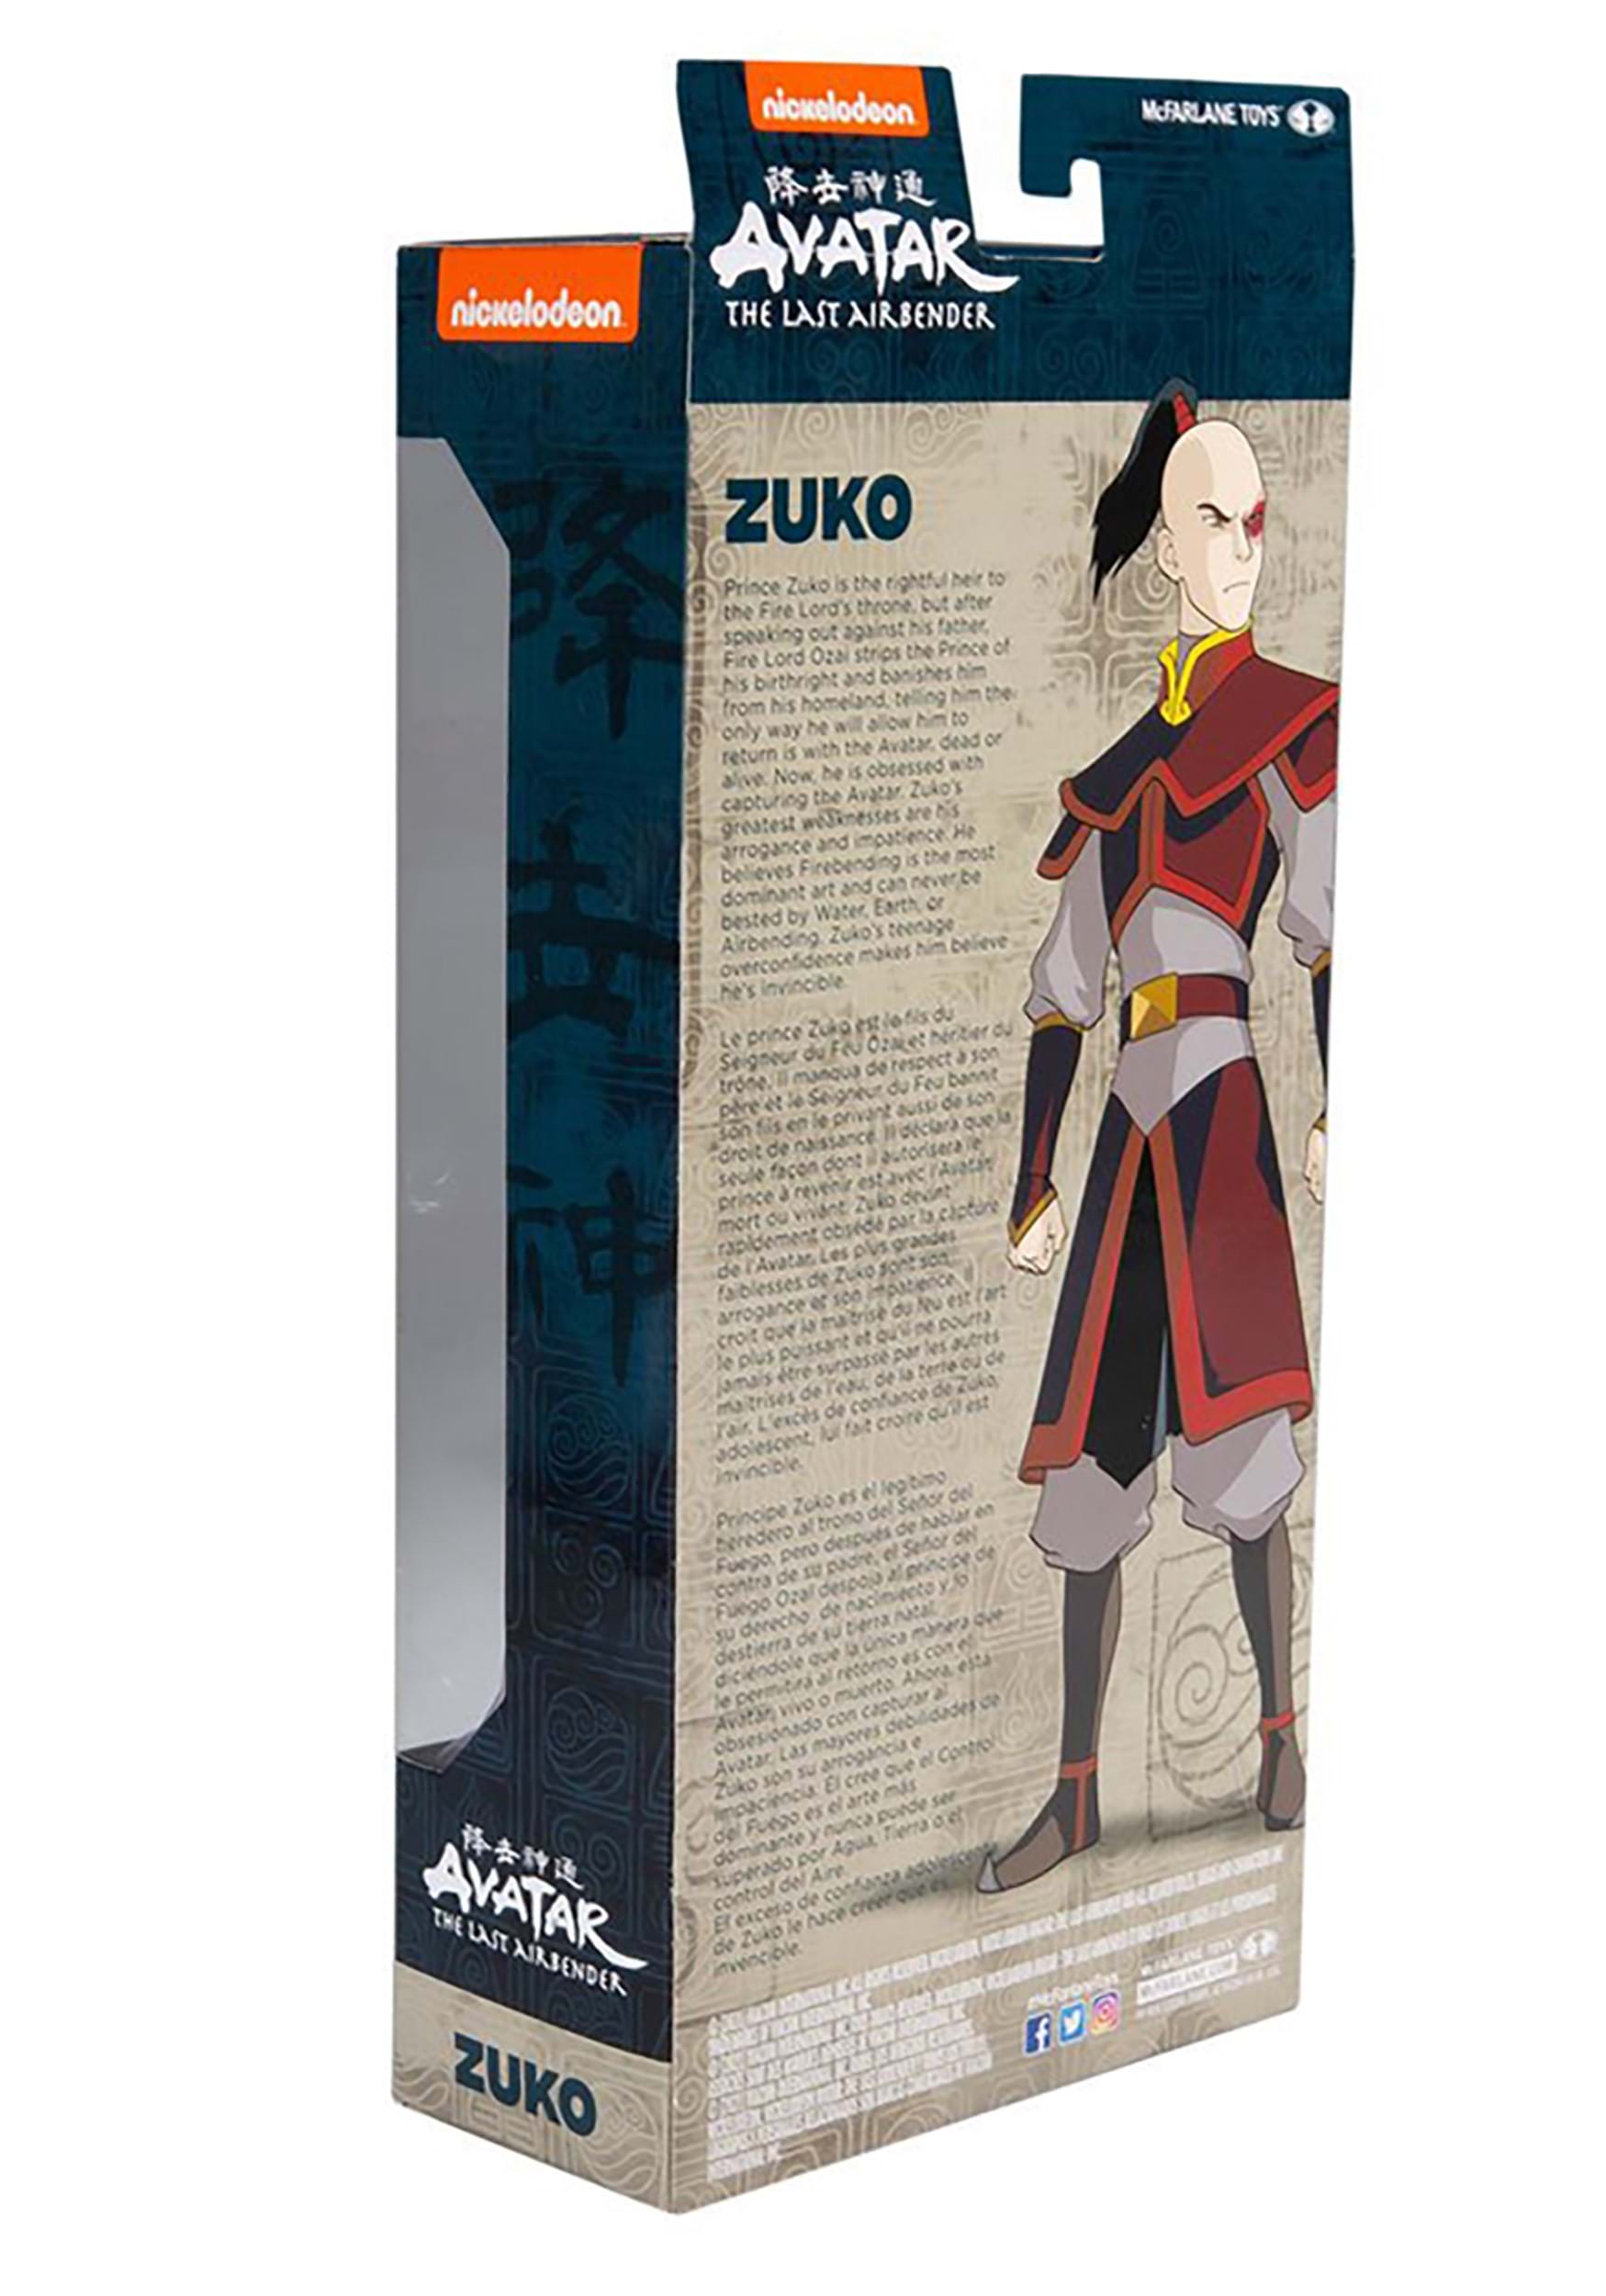 Avatar: The Last Airbender Wave 1 Prince Zuko 7-Inch Figure